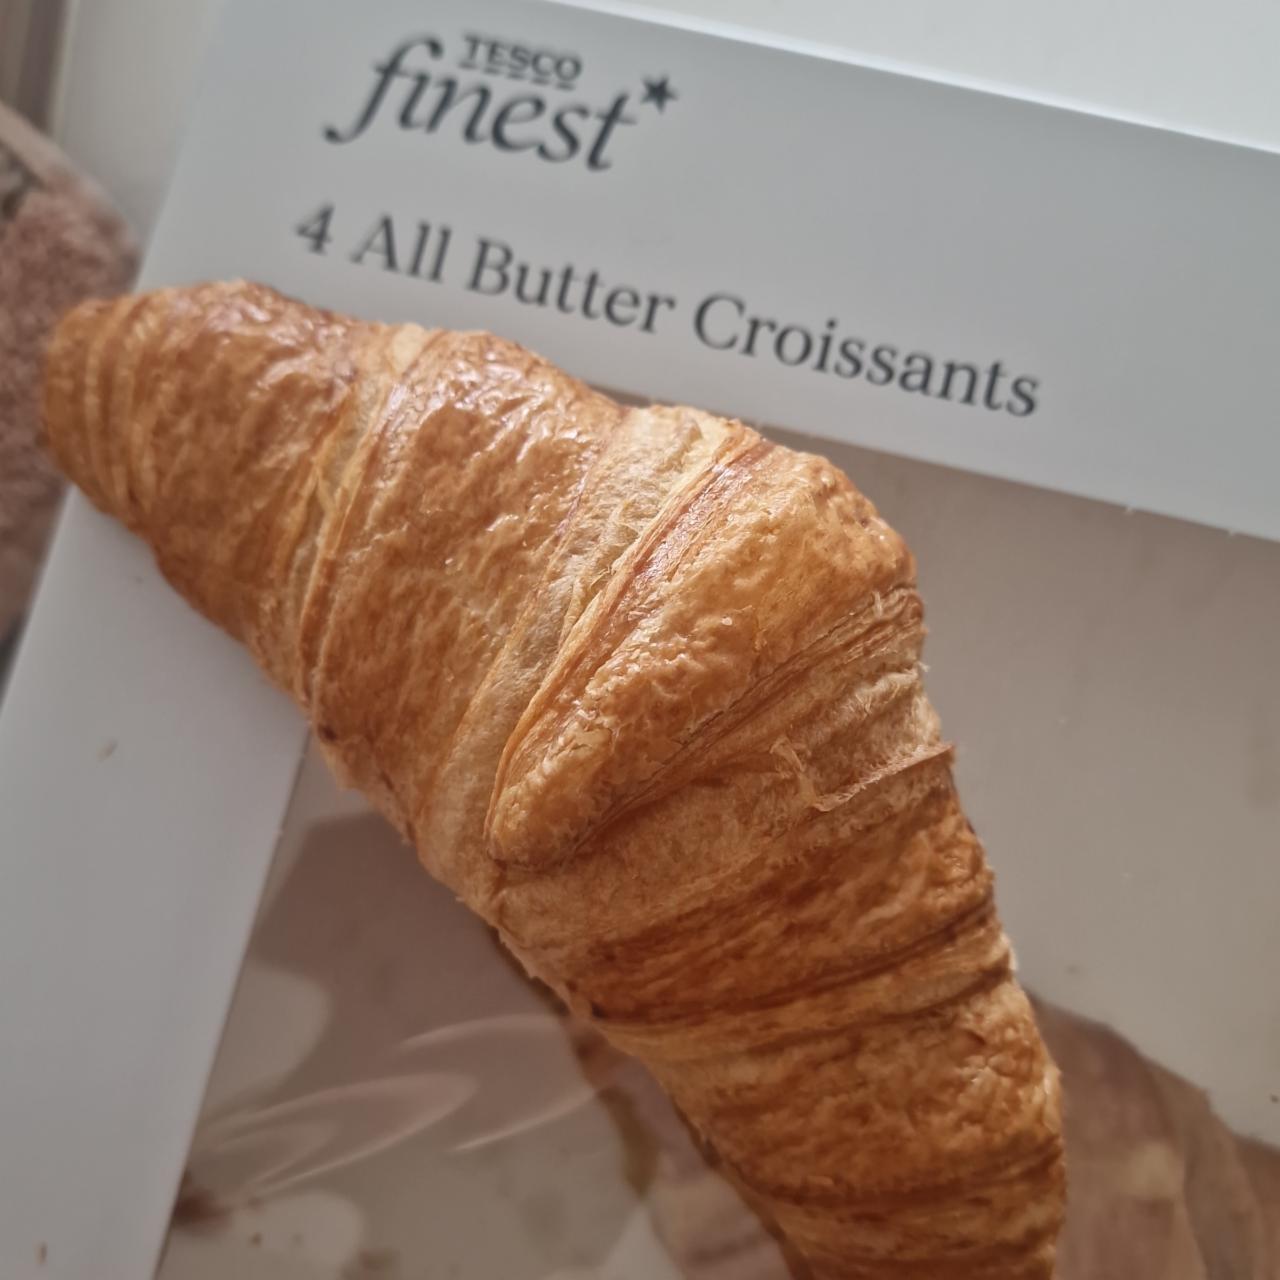 Fotografie - All butter croissants Tesco finest